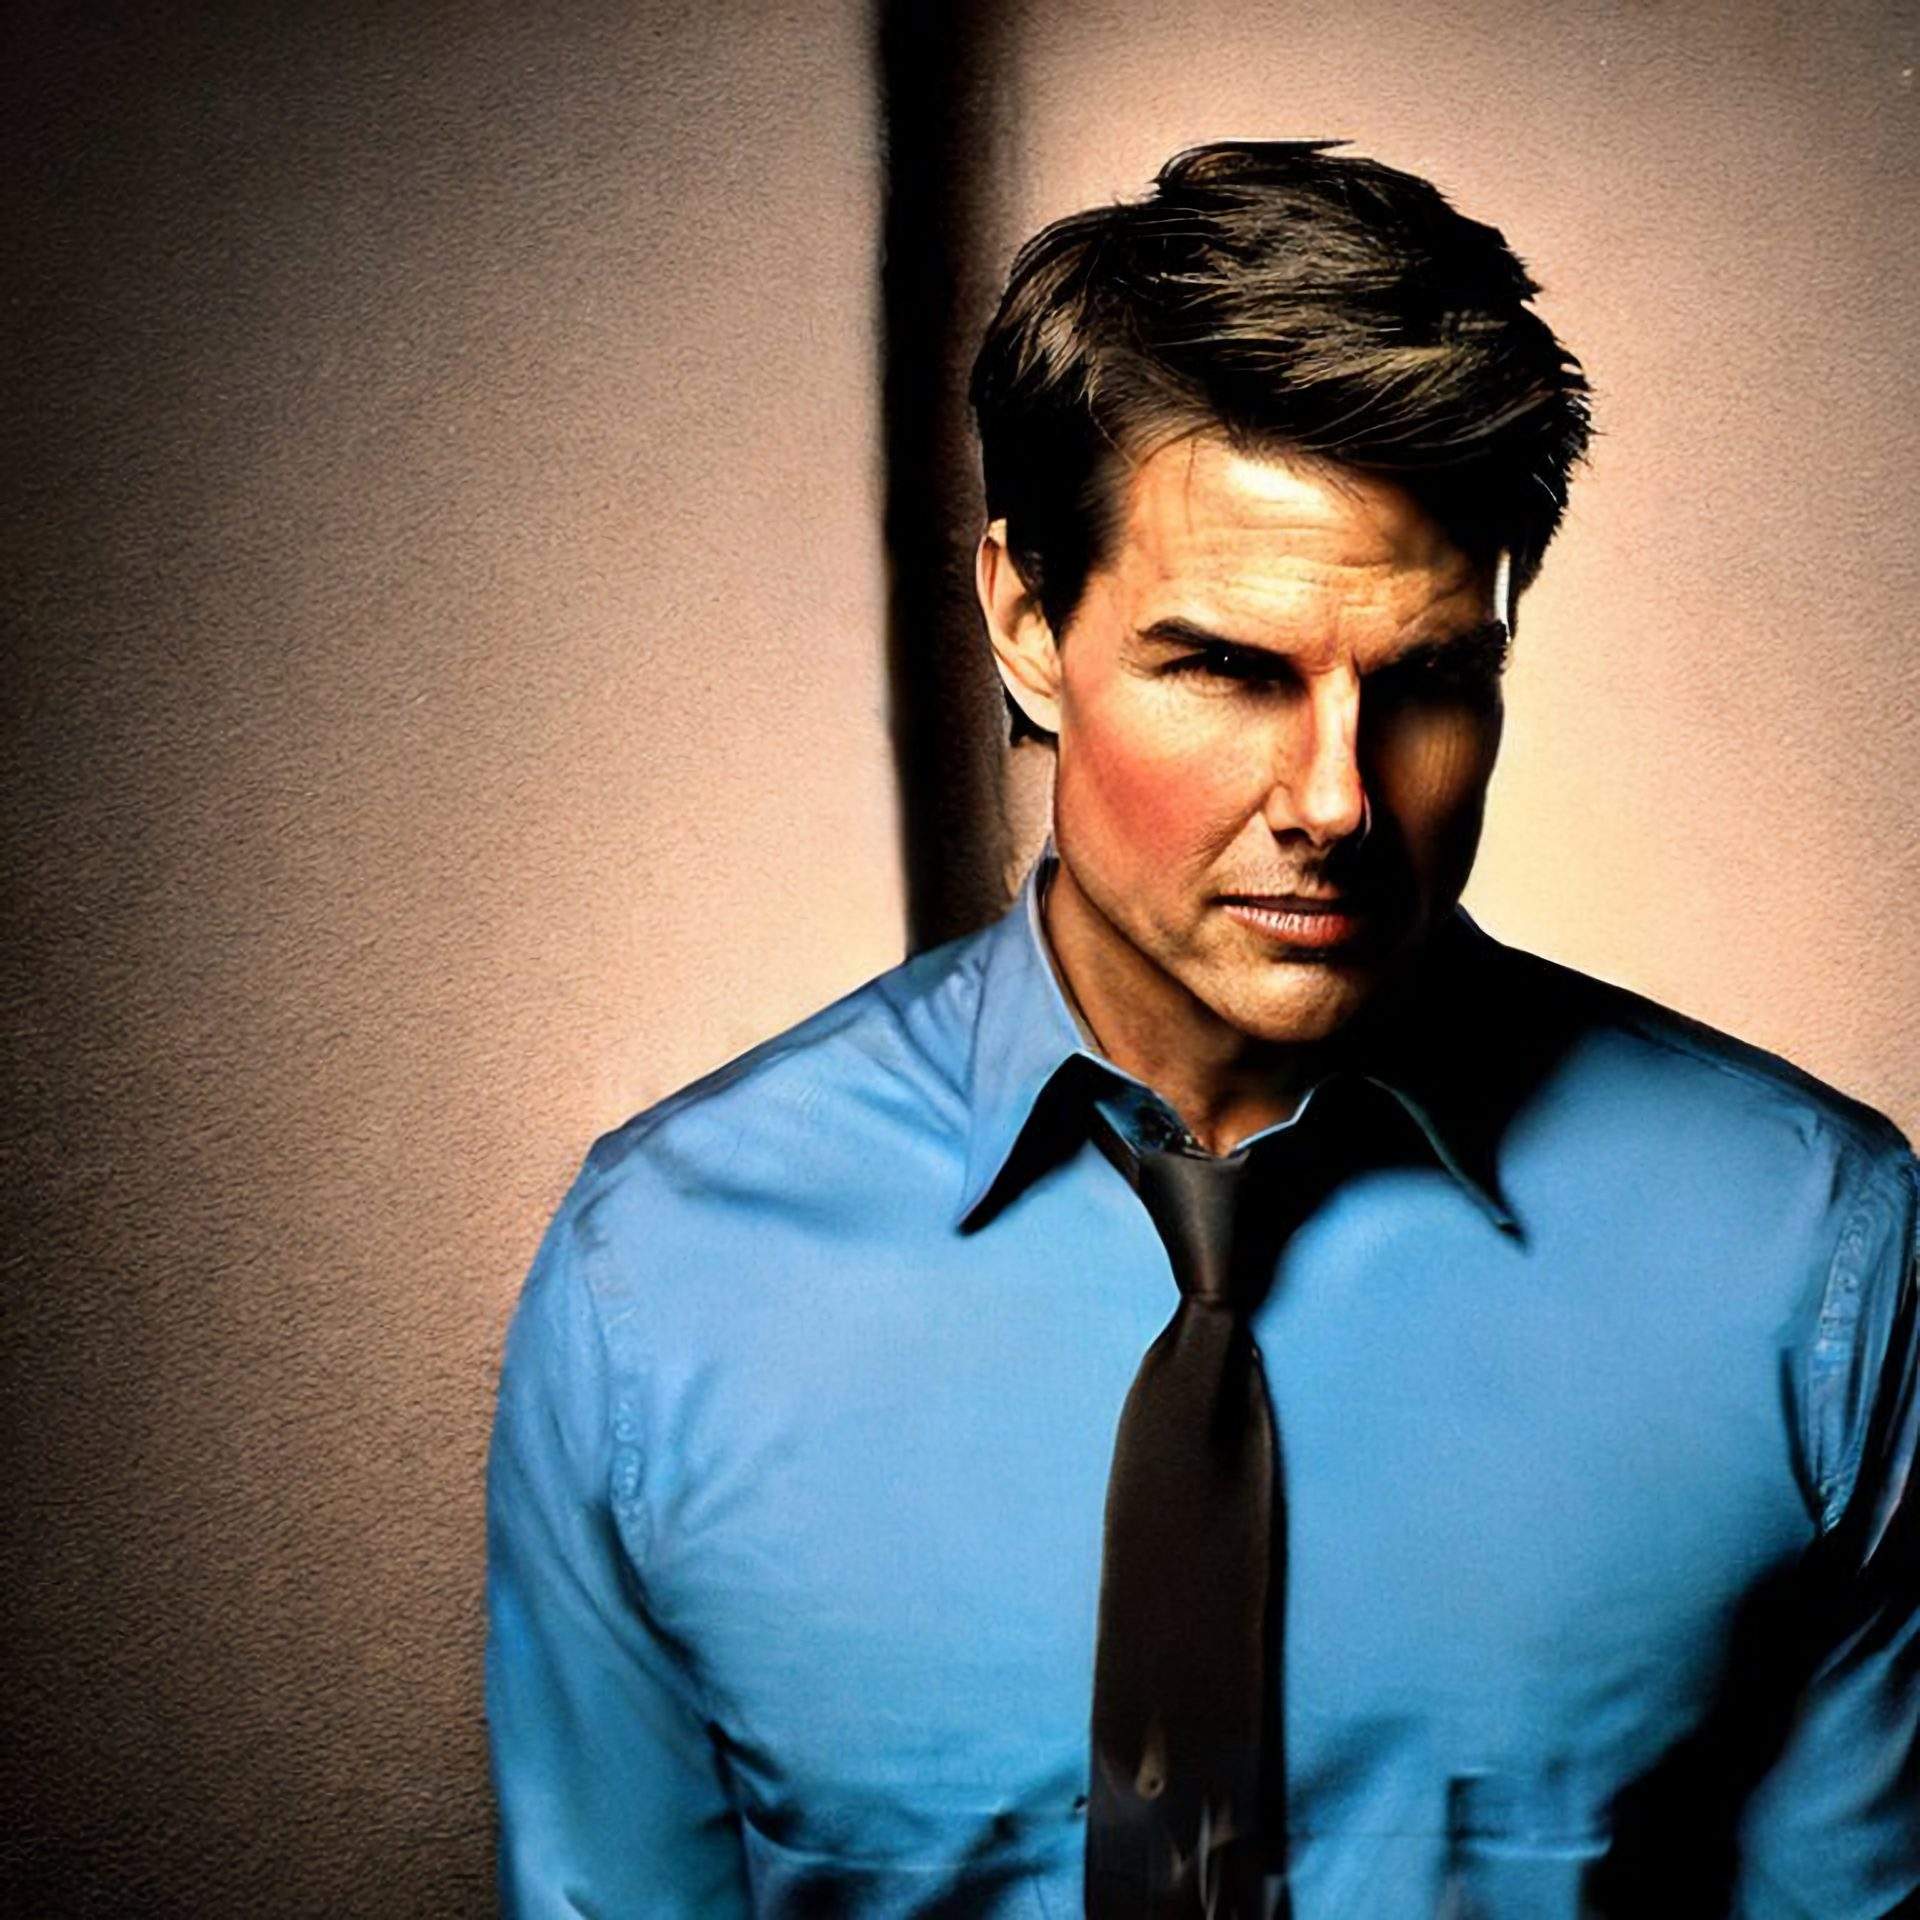 Iconic portrait of Tom Cruise